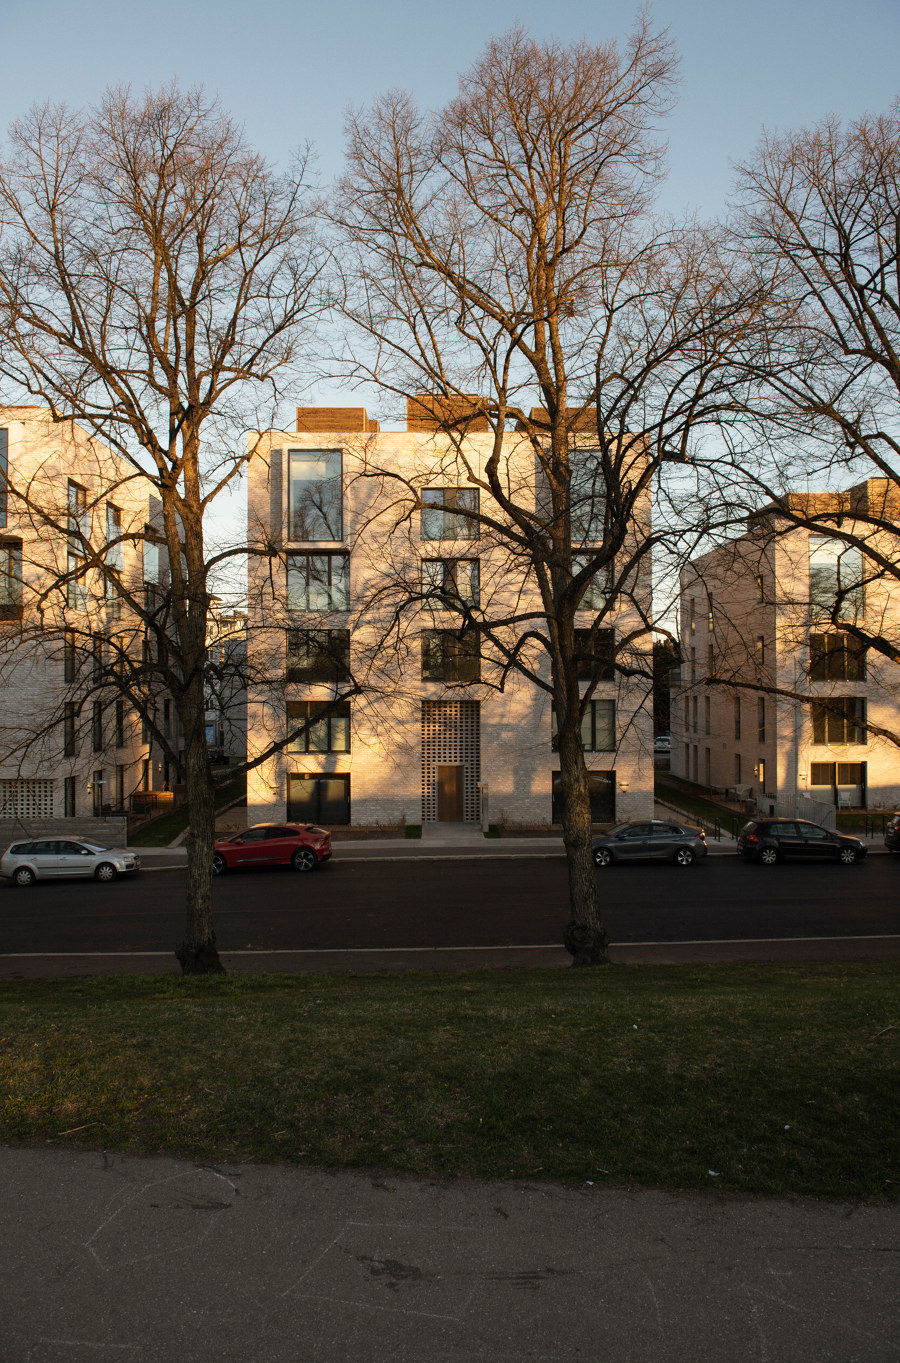 Pilestredet 77-79 | Apartment blocks | Reiulf Ramstad Arkitekter